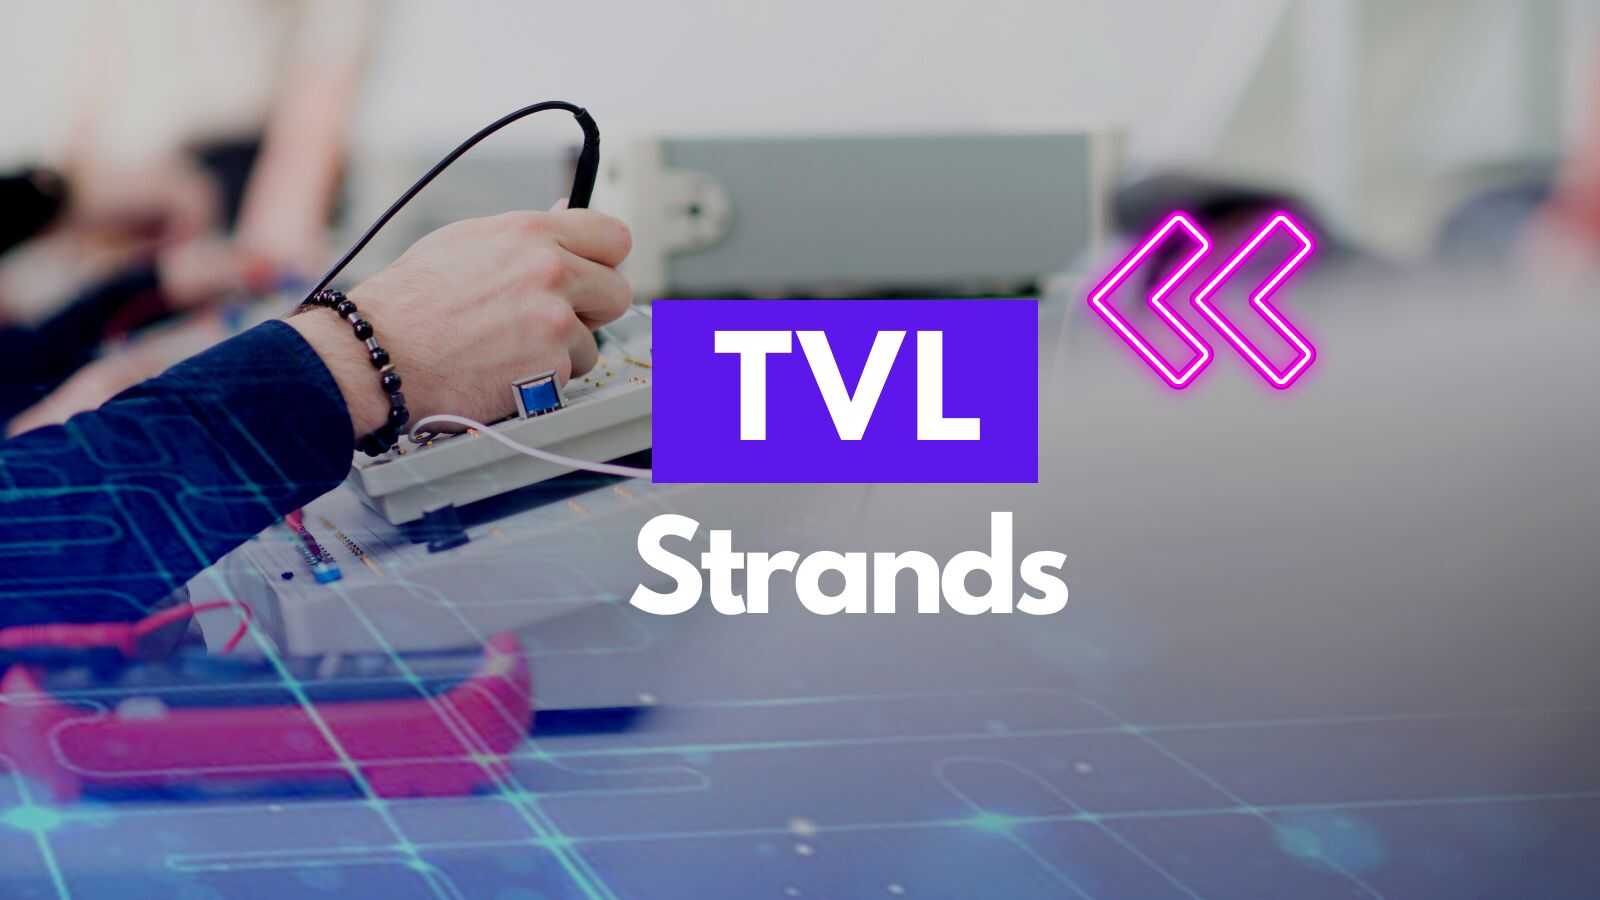 technical vocational livelihood TVL track strands